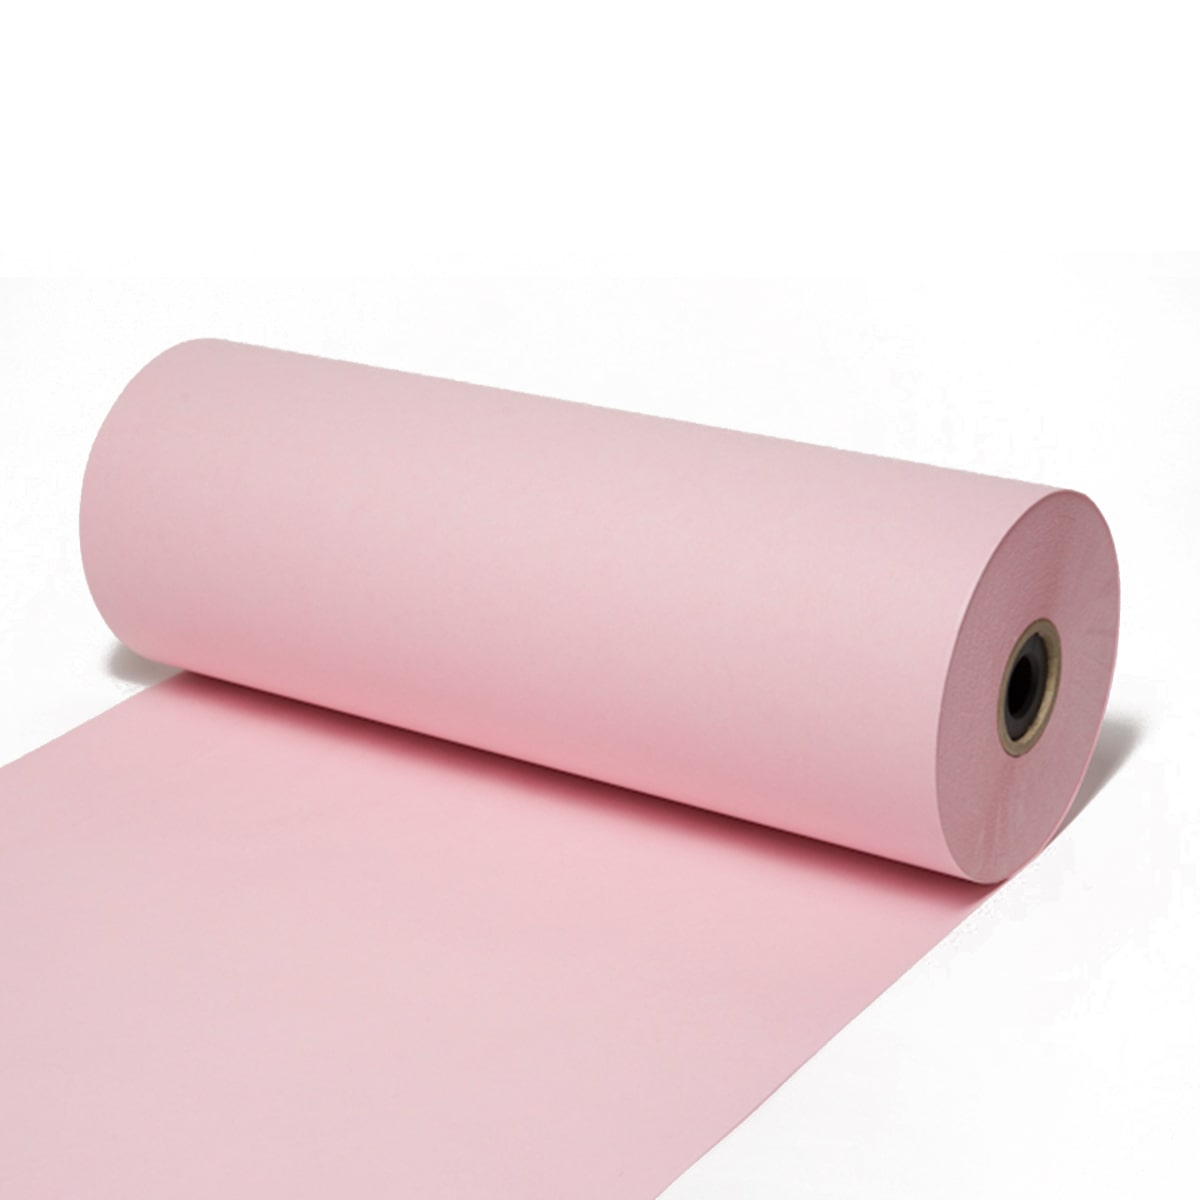 Seidenpapier Rosa, 50 / 75 cm breit, ca. 500 Meter / Rolle